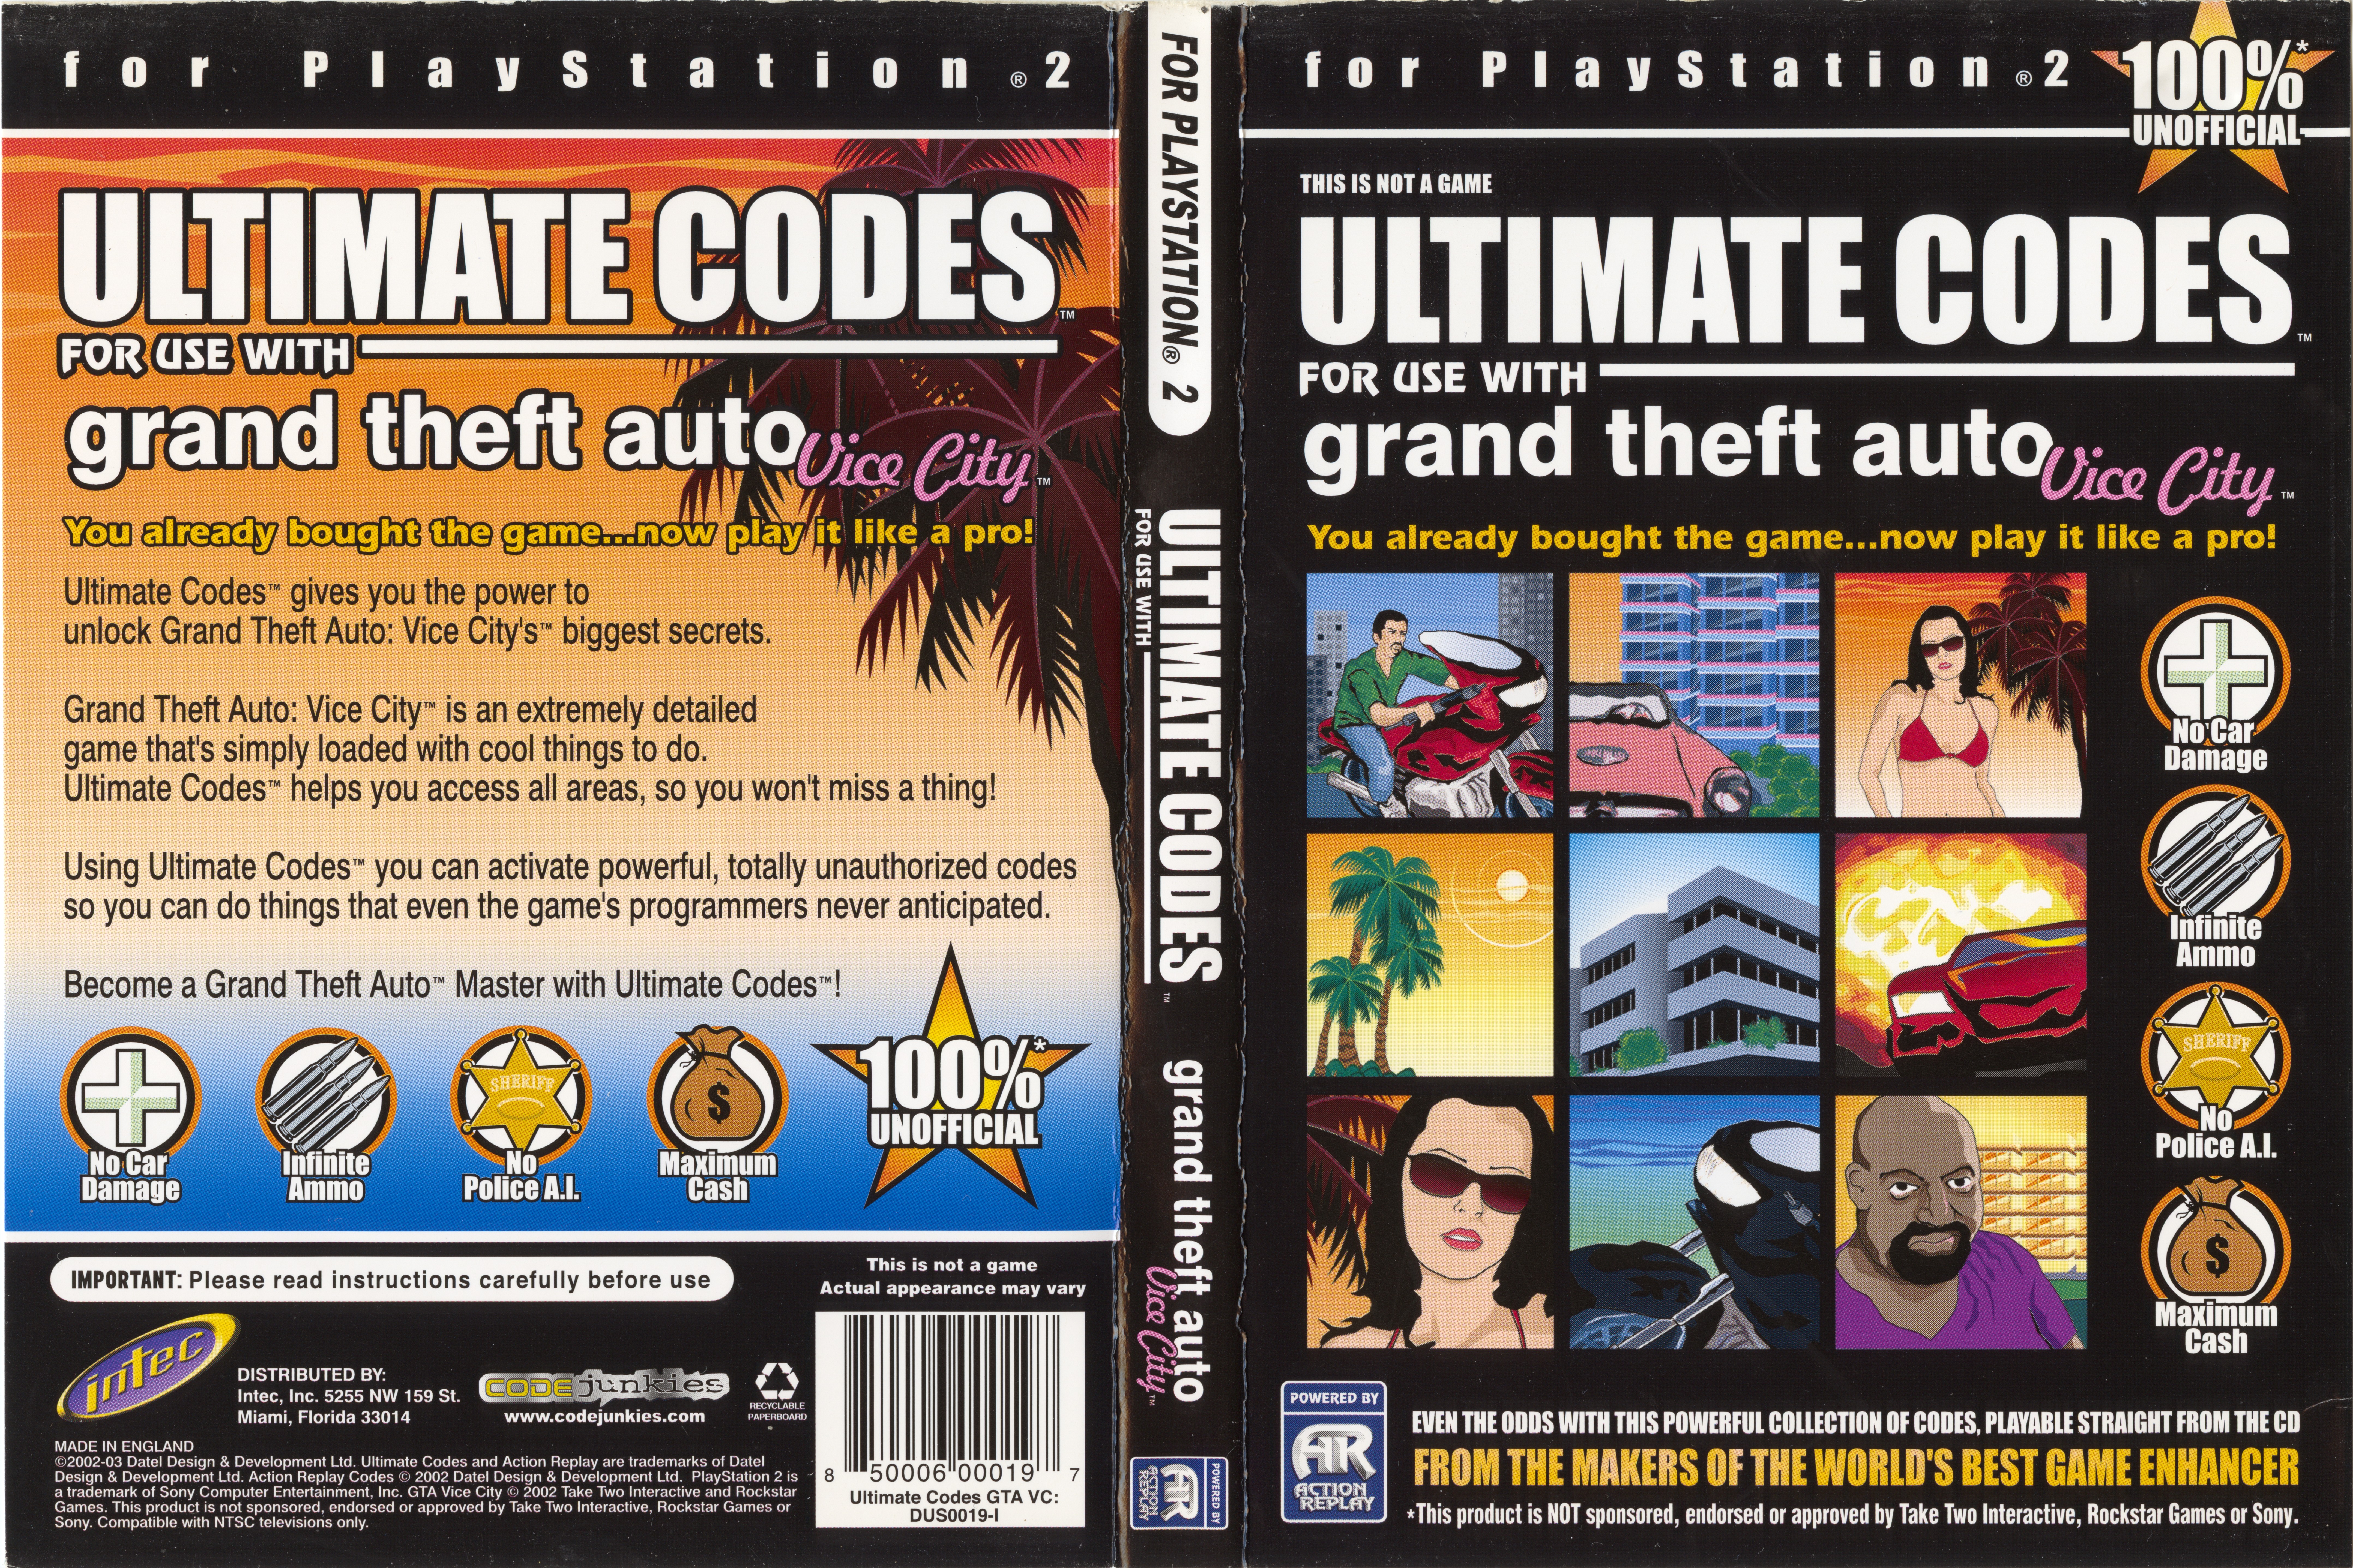 Jogo GTA San Andreas Completo Original Black label PS2